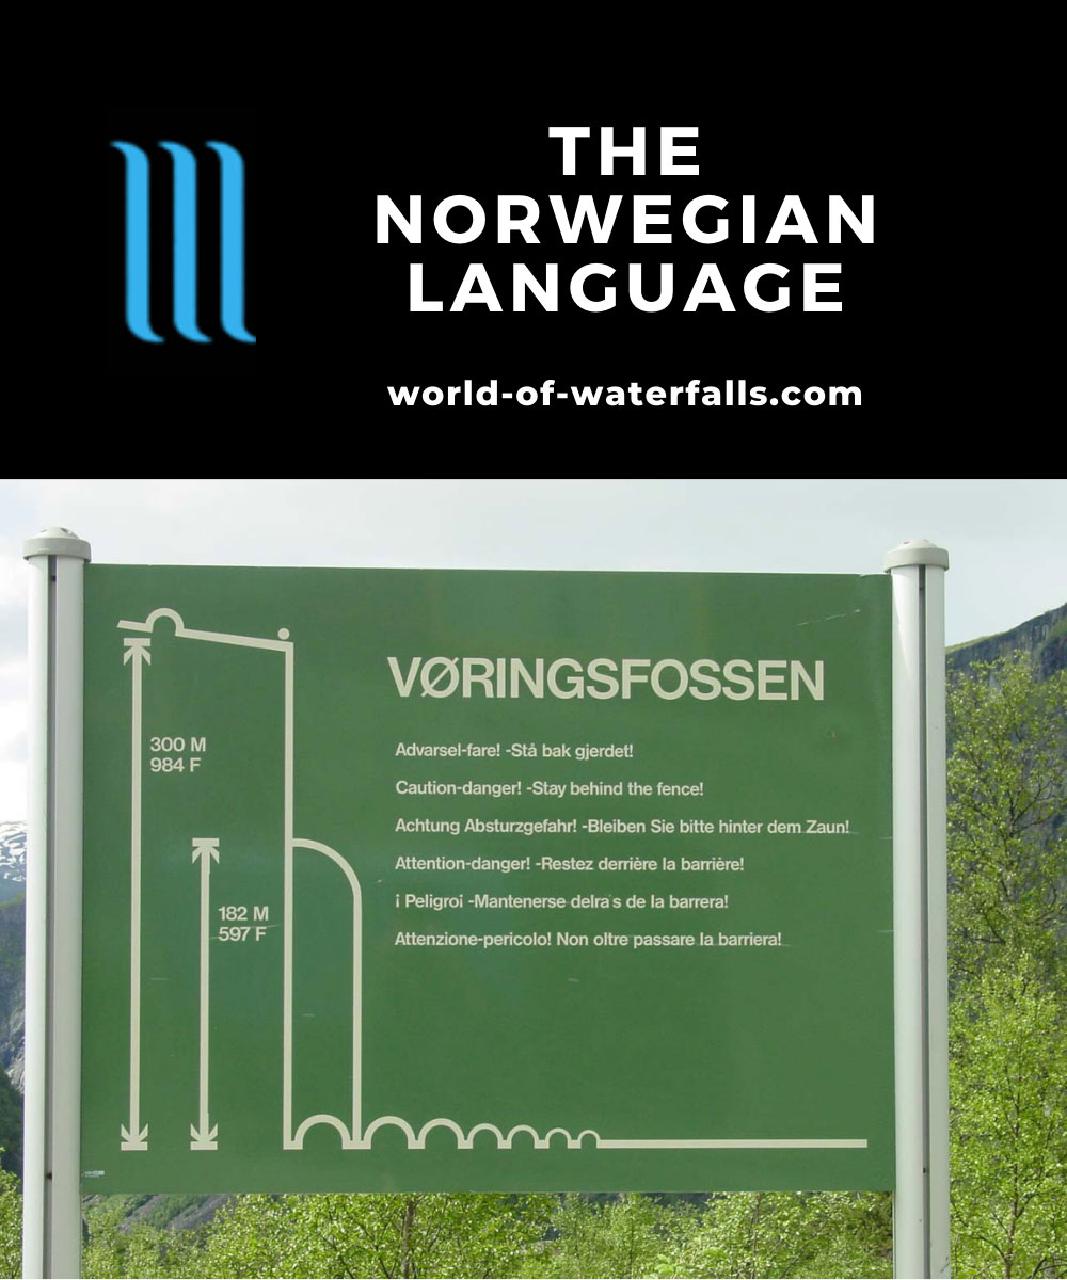 The Norwegian Language